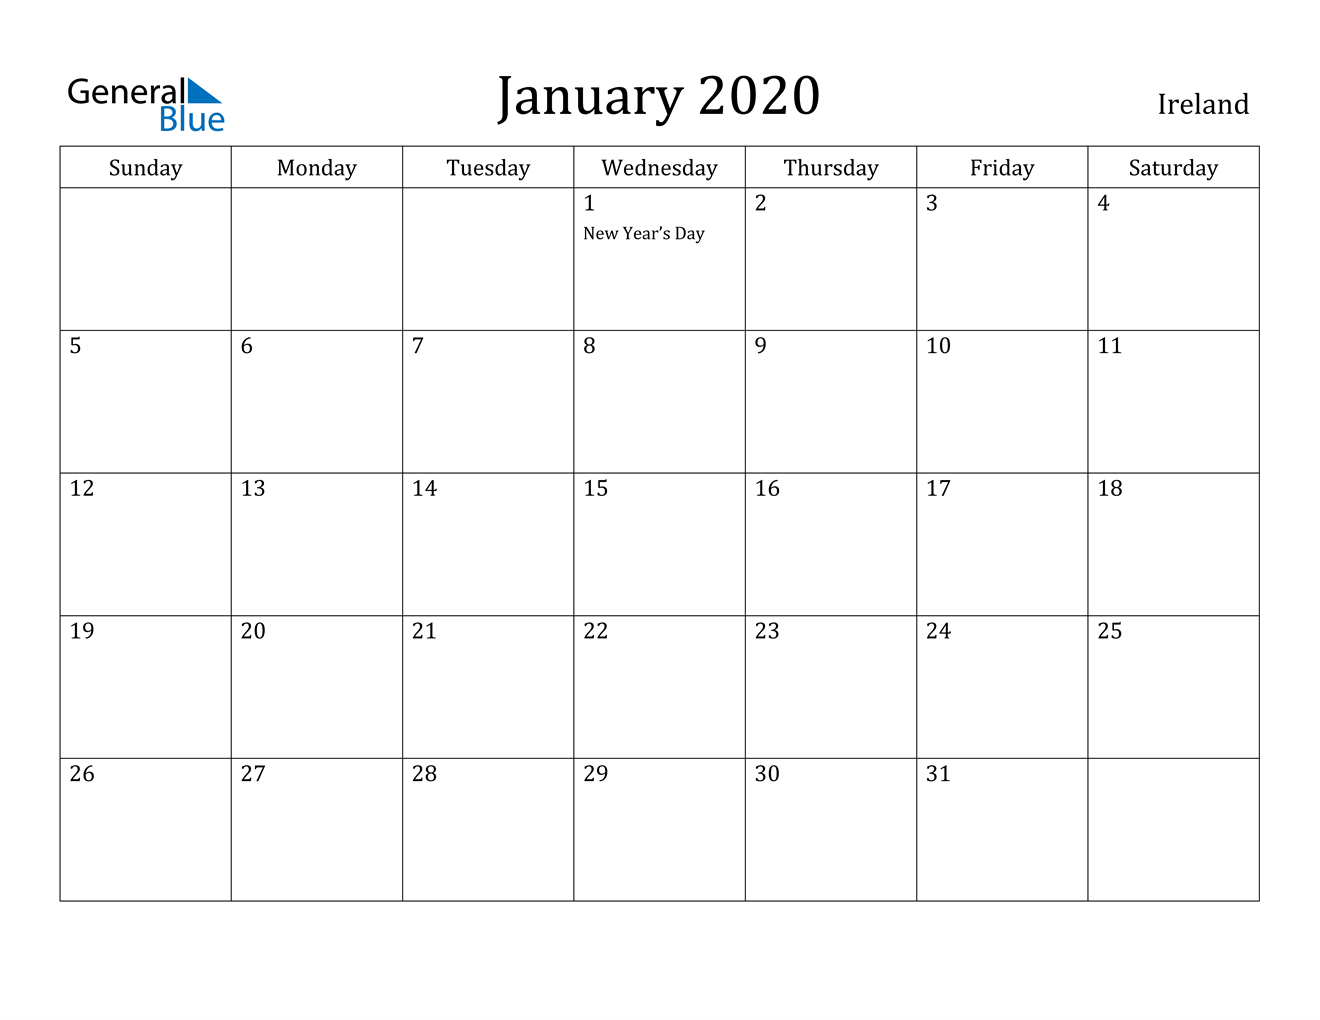 January 2020 Calendar - Ireland